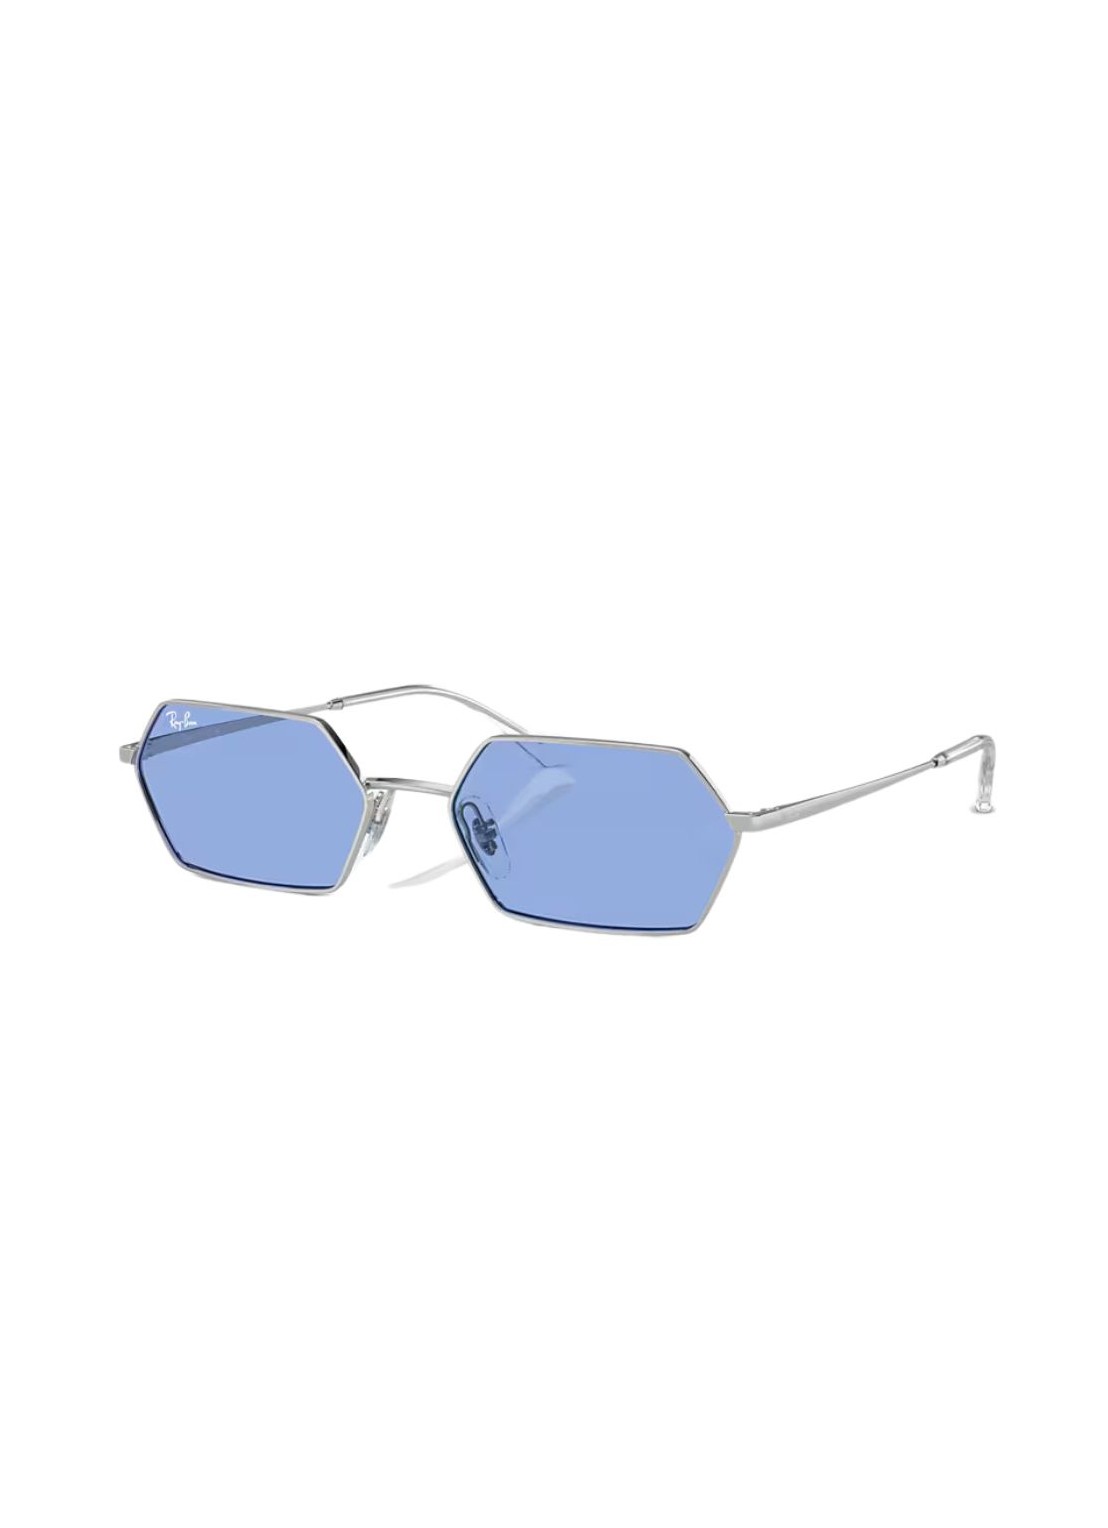 Gafas rayban sunglasses unisex0rb3728 - 0rb3728 003/80 talla 58
 